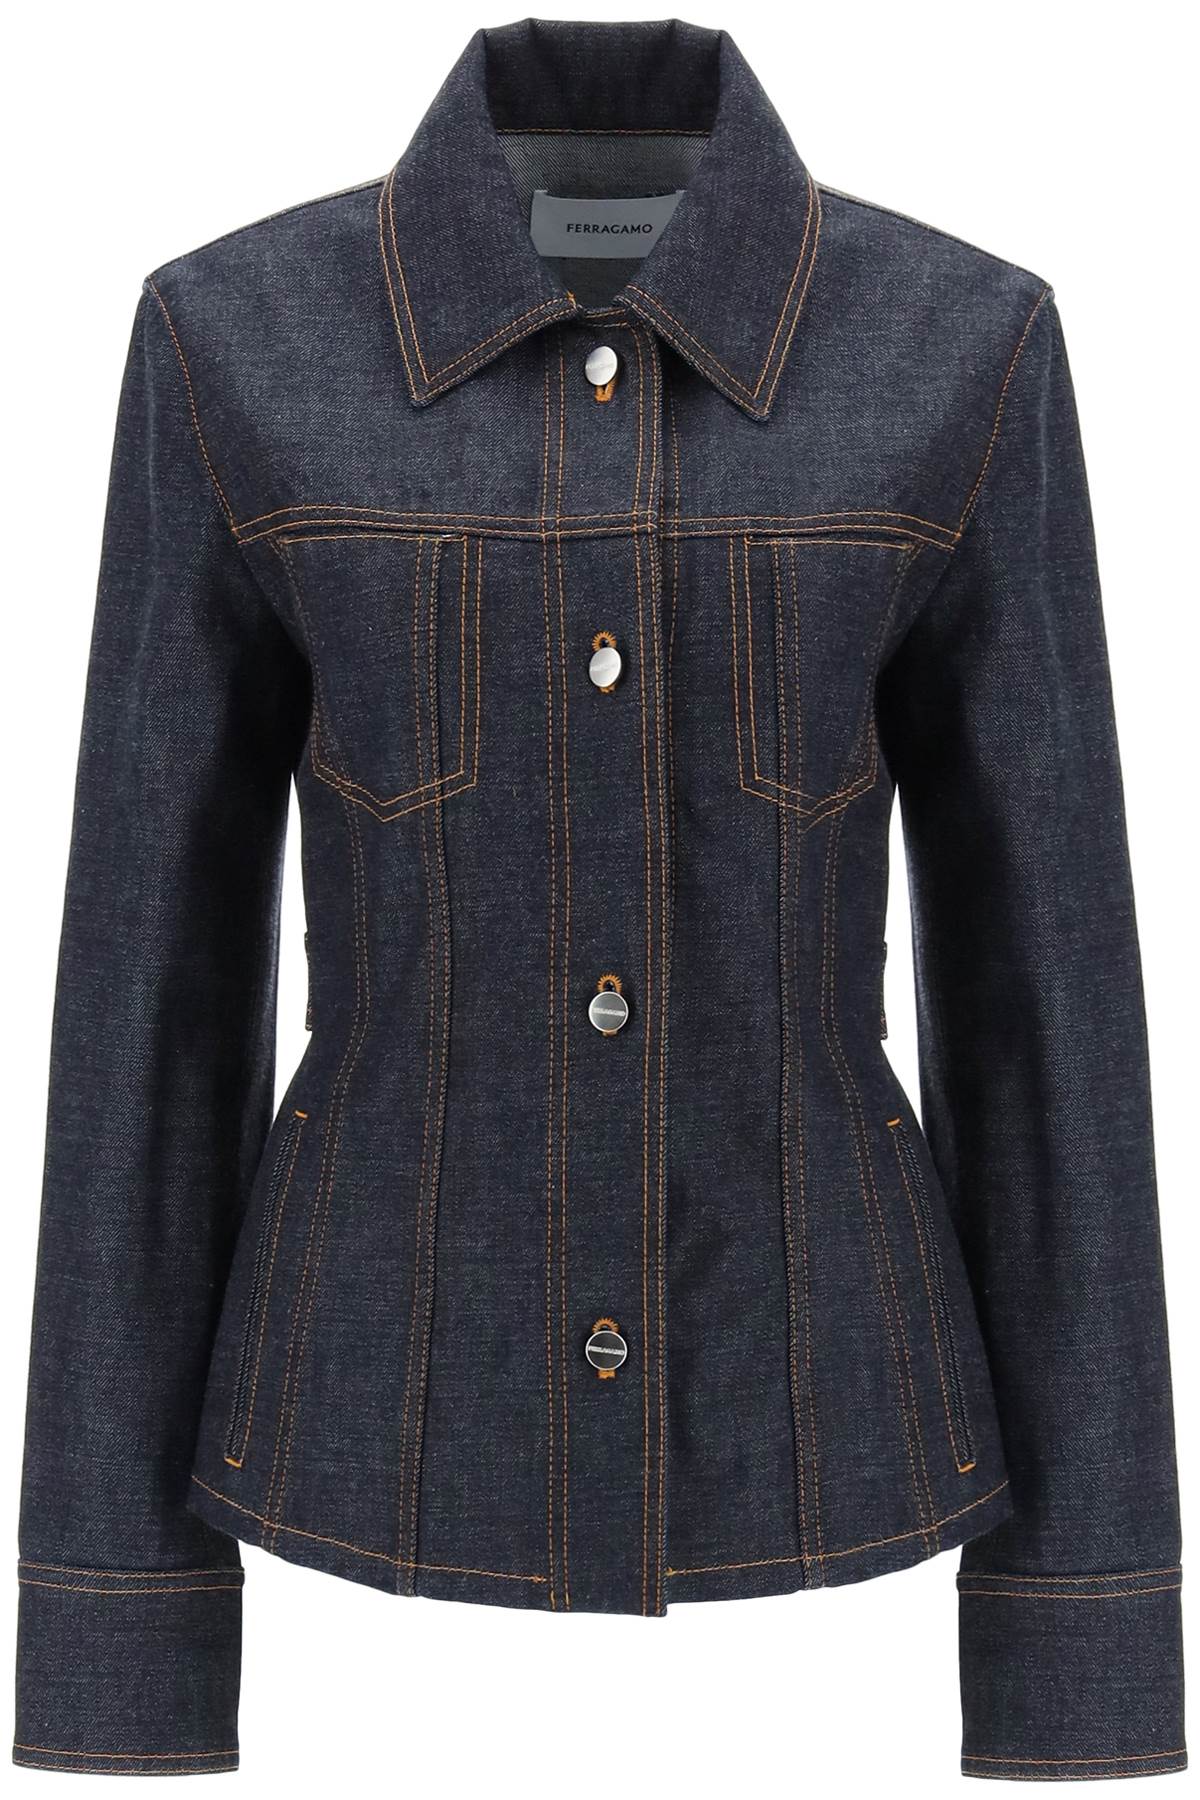 Shop Ferragamo Women's Blue Shaped Denim Jacket